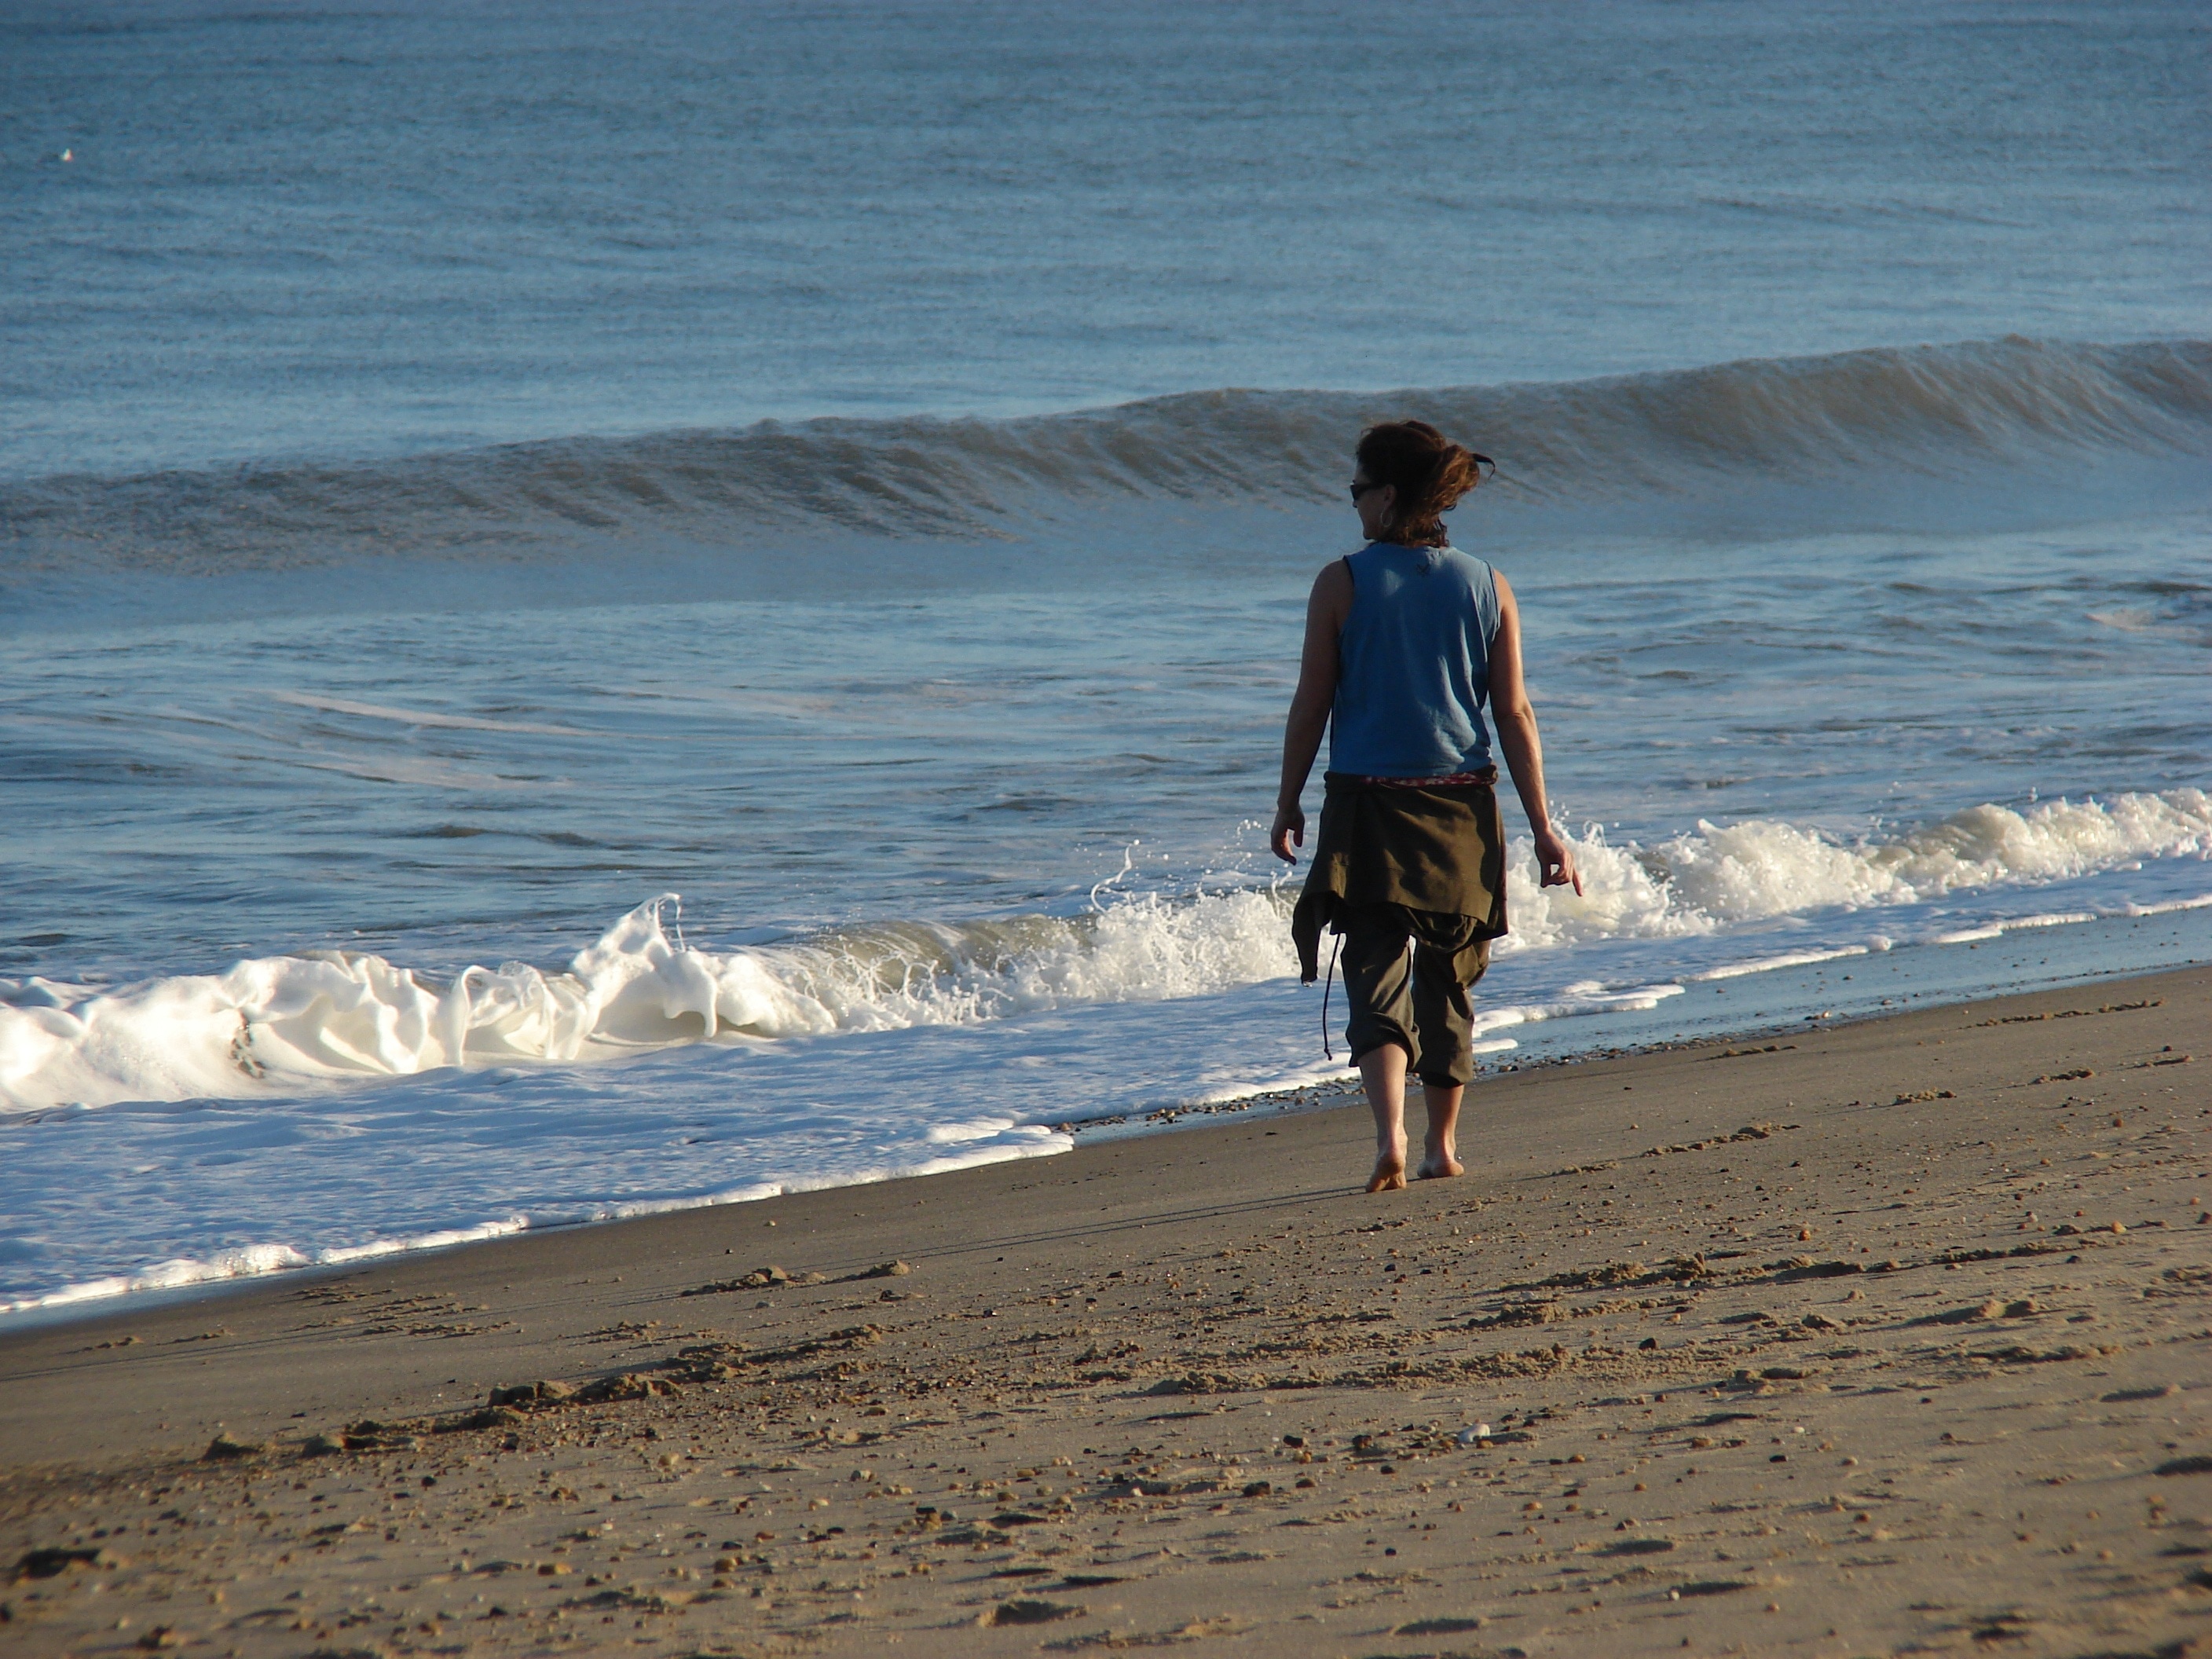 Beach walk. Прогулка на пляже. Ходить на пляж. Фото прогулки по пляжам. Прохожие идут по пляжу.